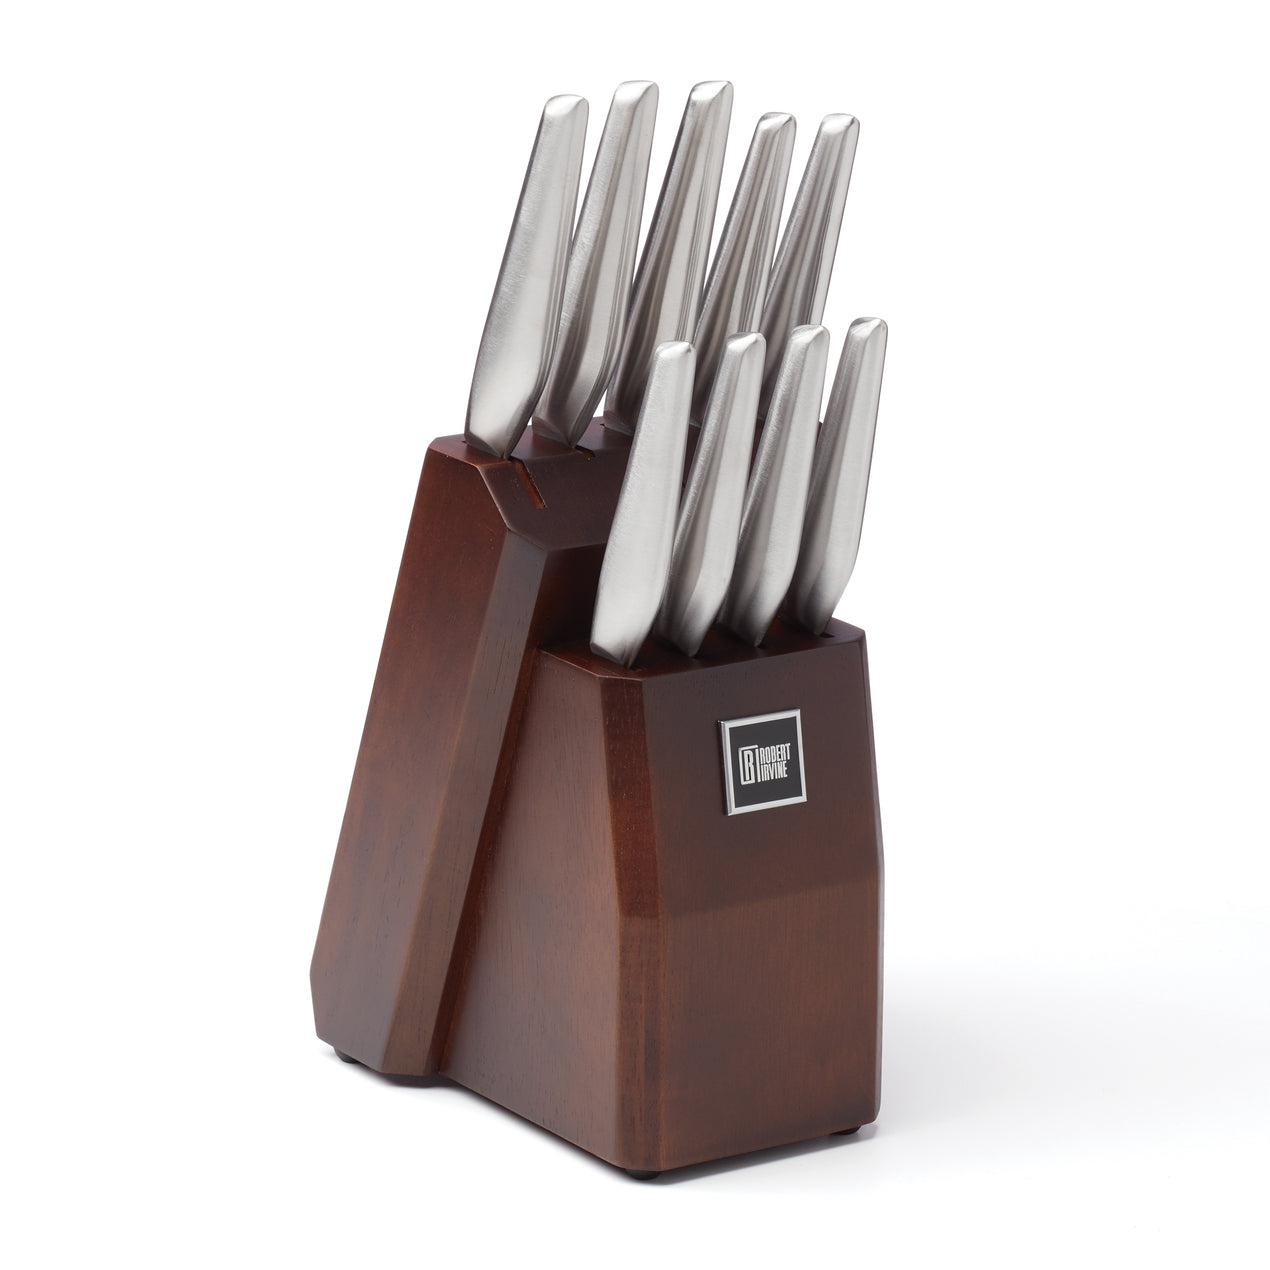 Robert Irvine 10-Piece Cutlery Block Set, Silver